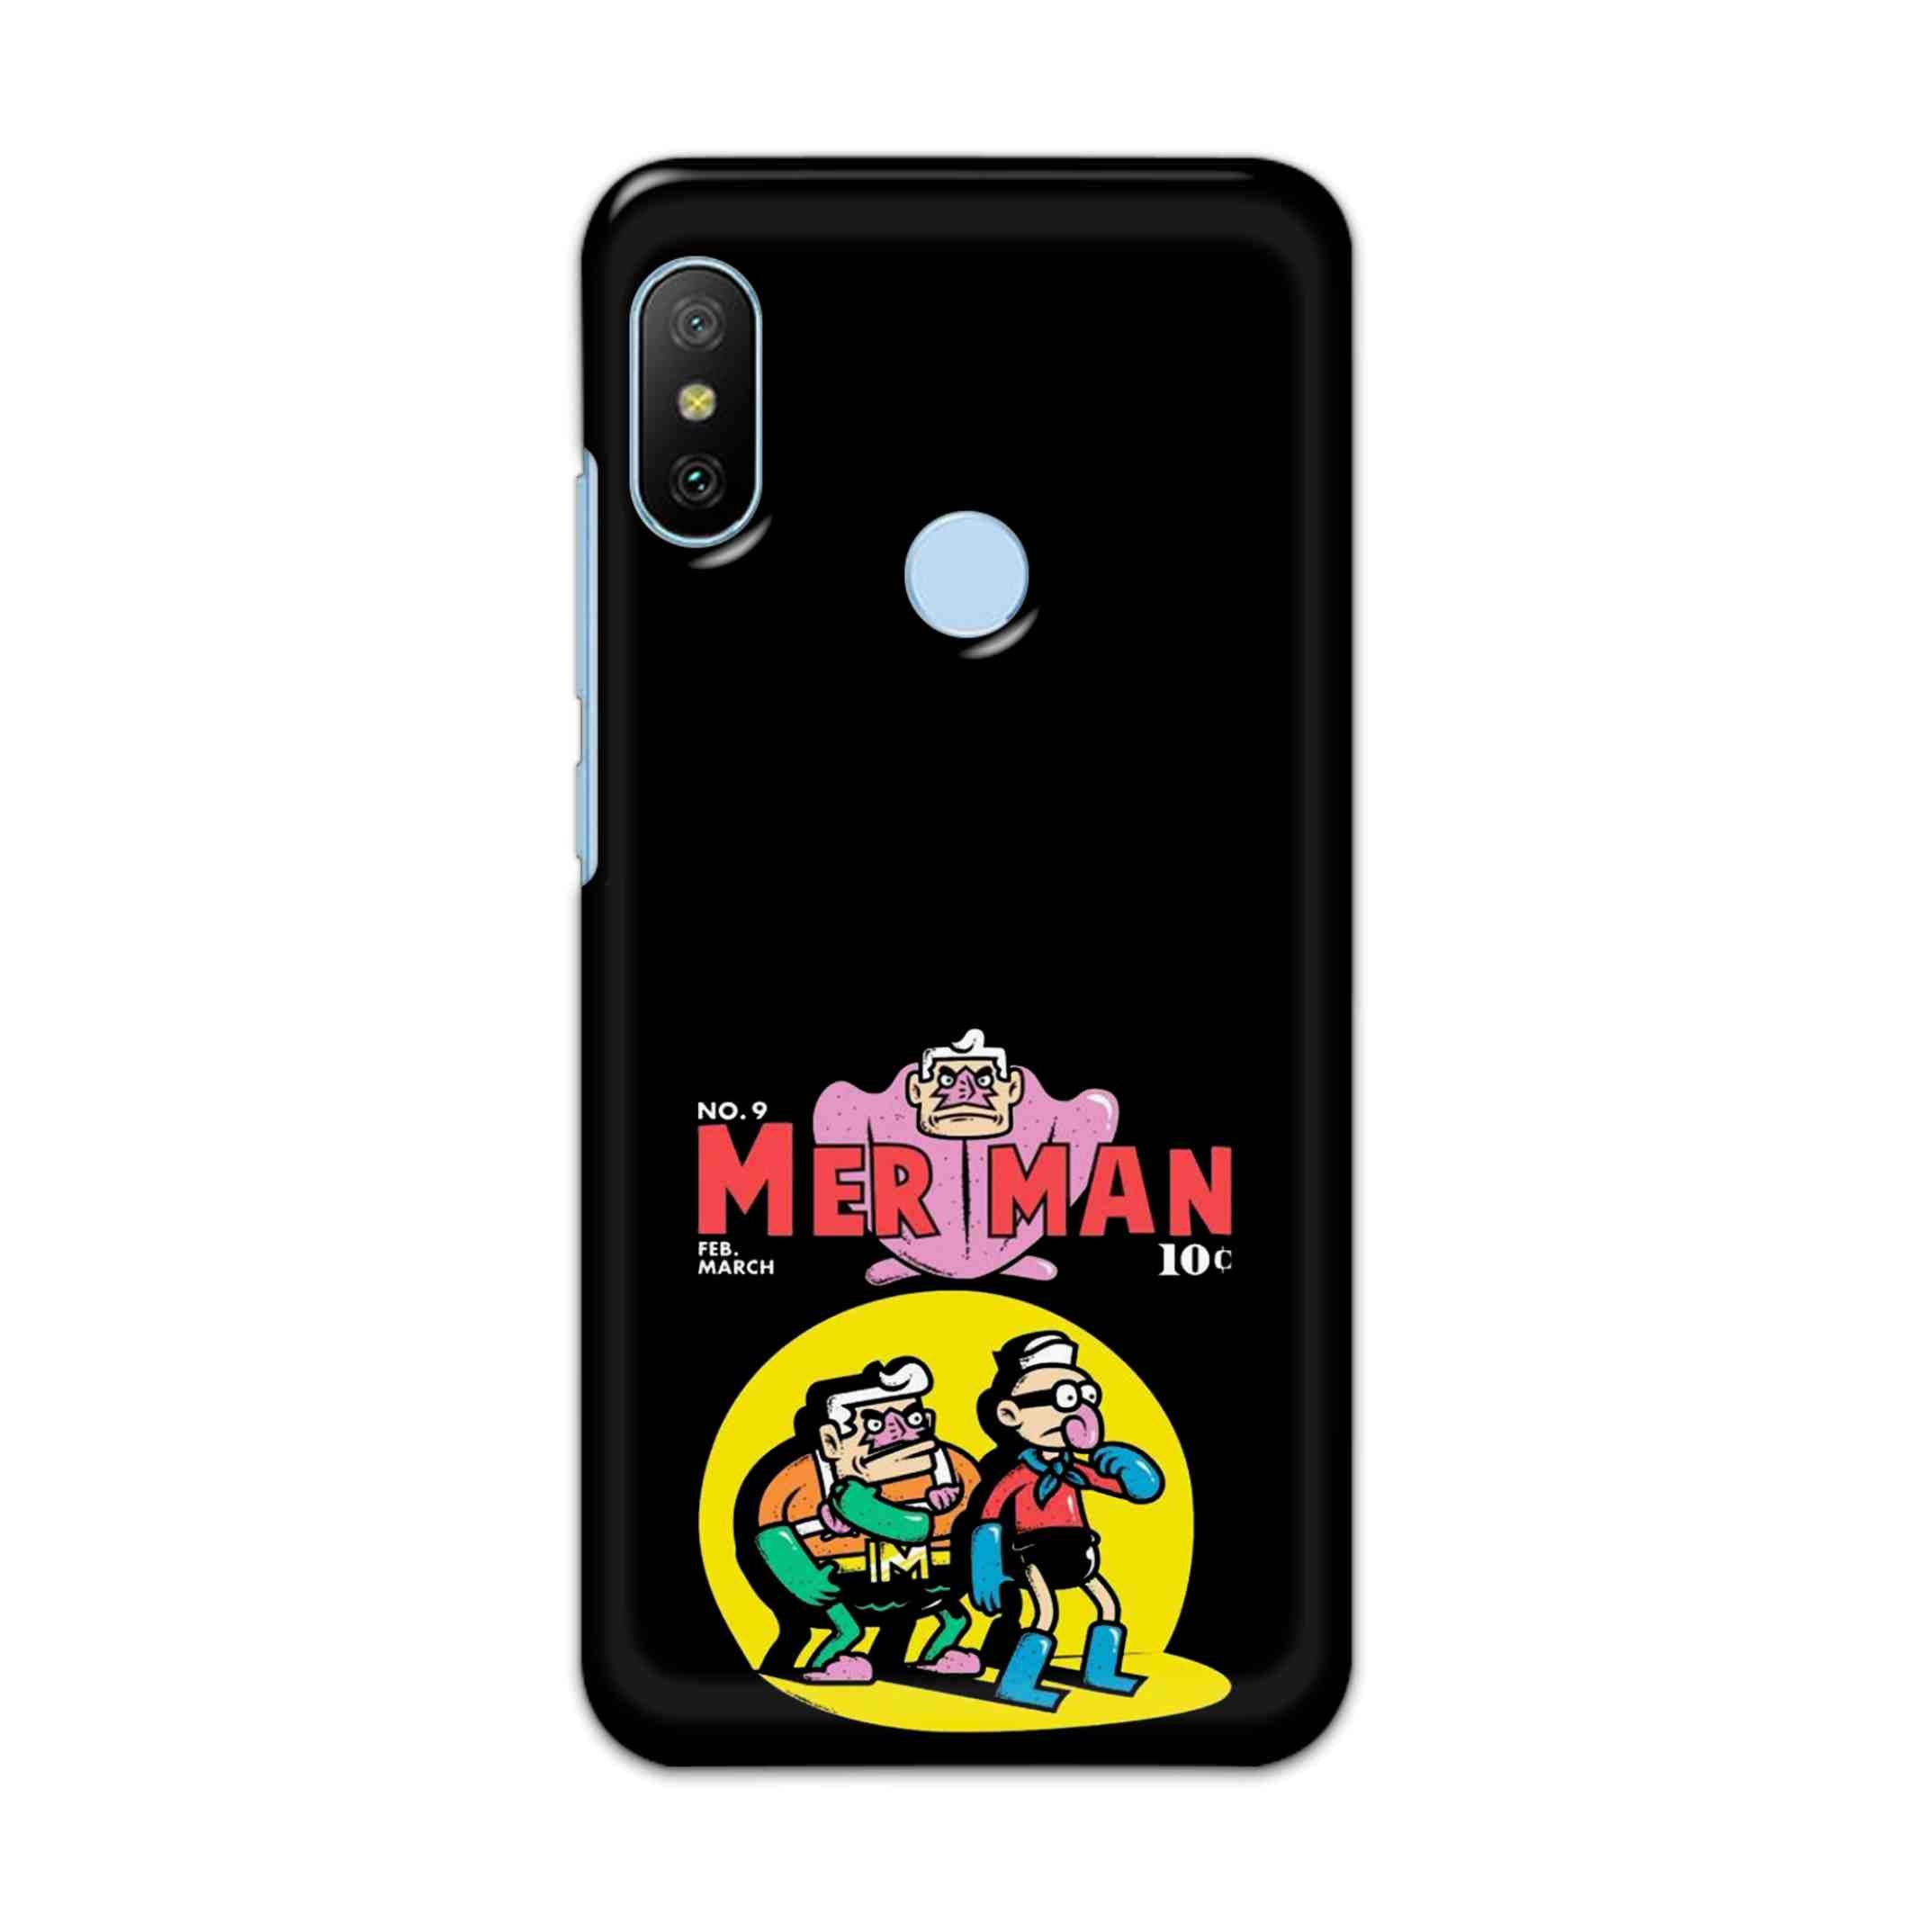 Buy Merman Hard Back Mobile Phone Case/Cover For Xiaomi Redmi 6 Pro Online